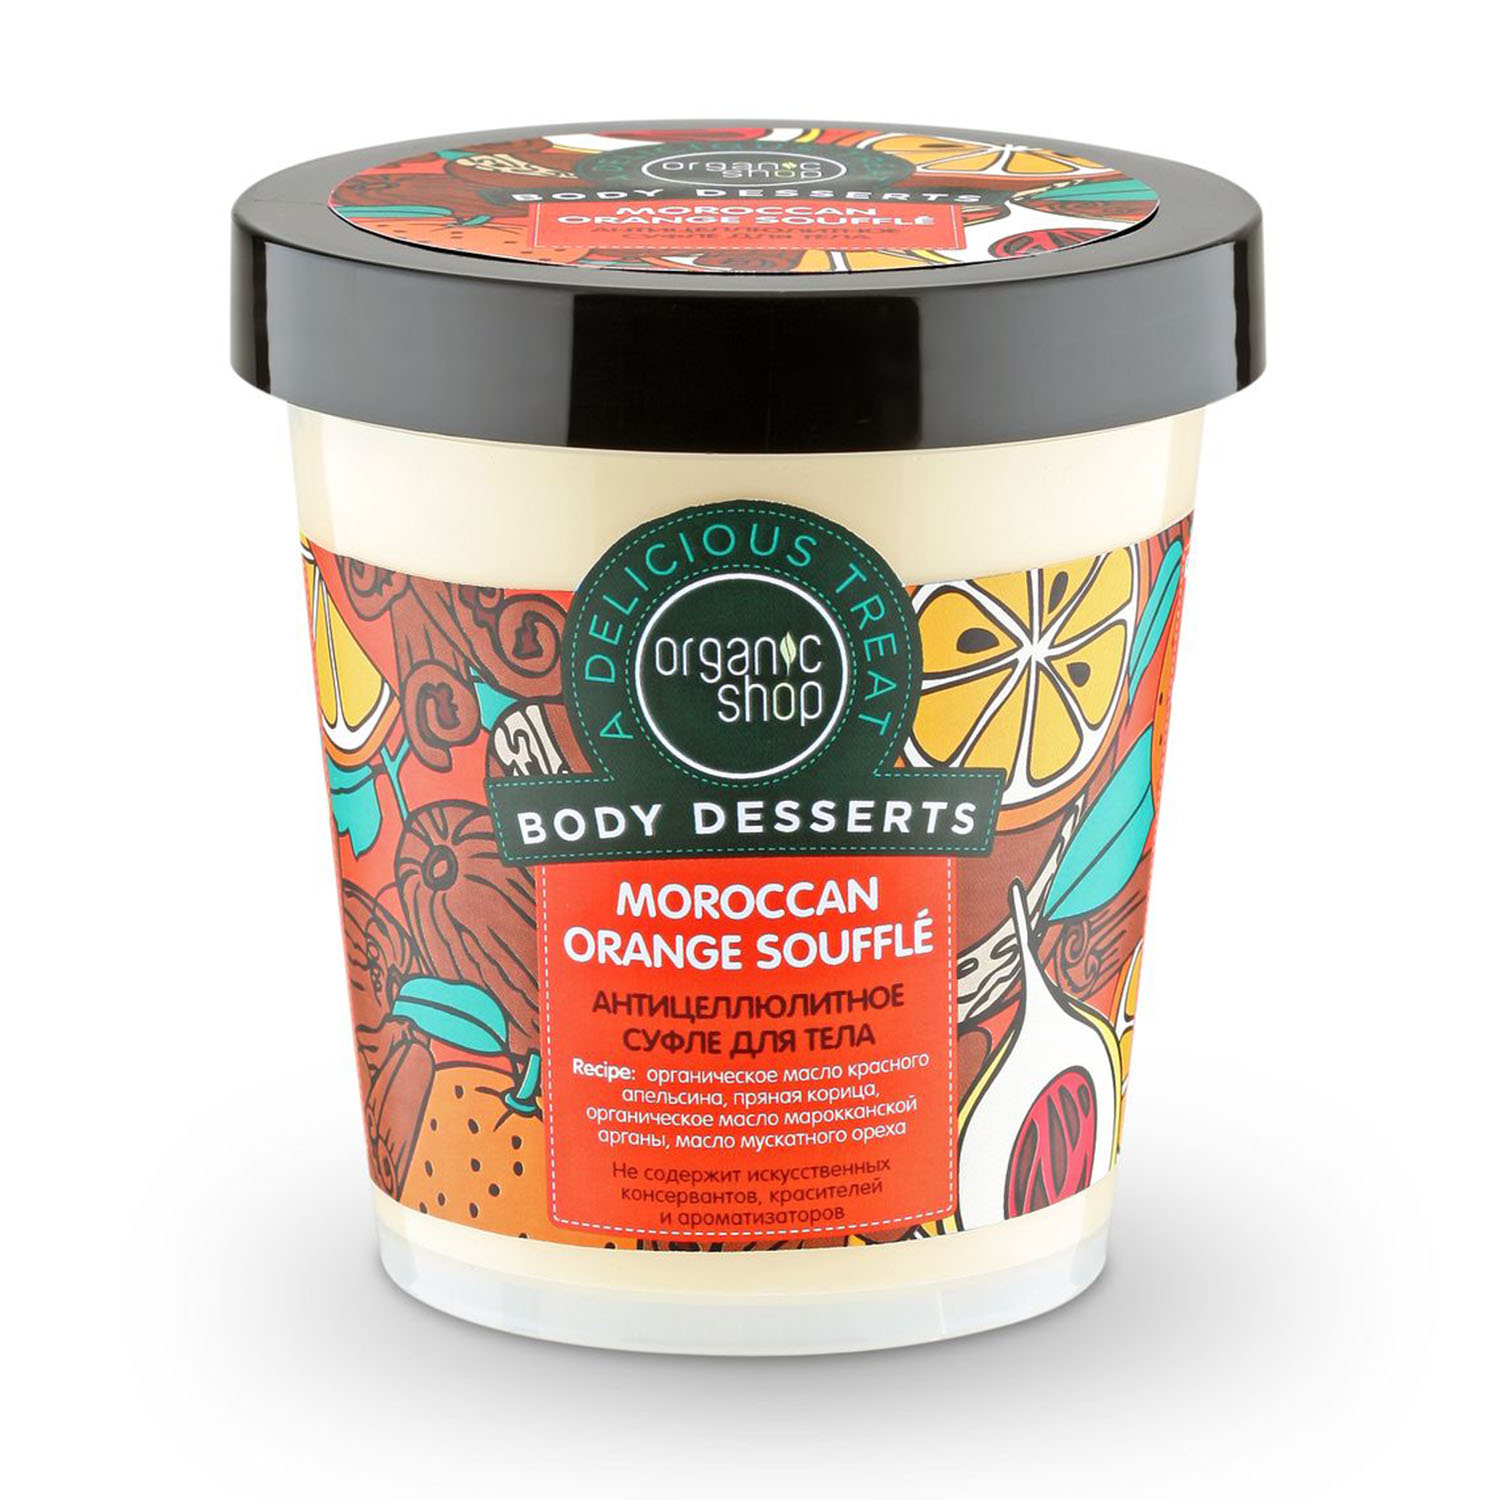 Organic Shop Антицеллюлитное суфле для тела Orange, 450 мл (Organic Shop, Body Desserts) цена и фото